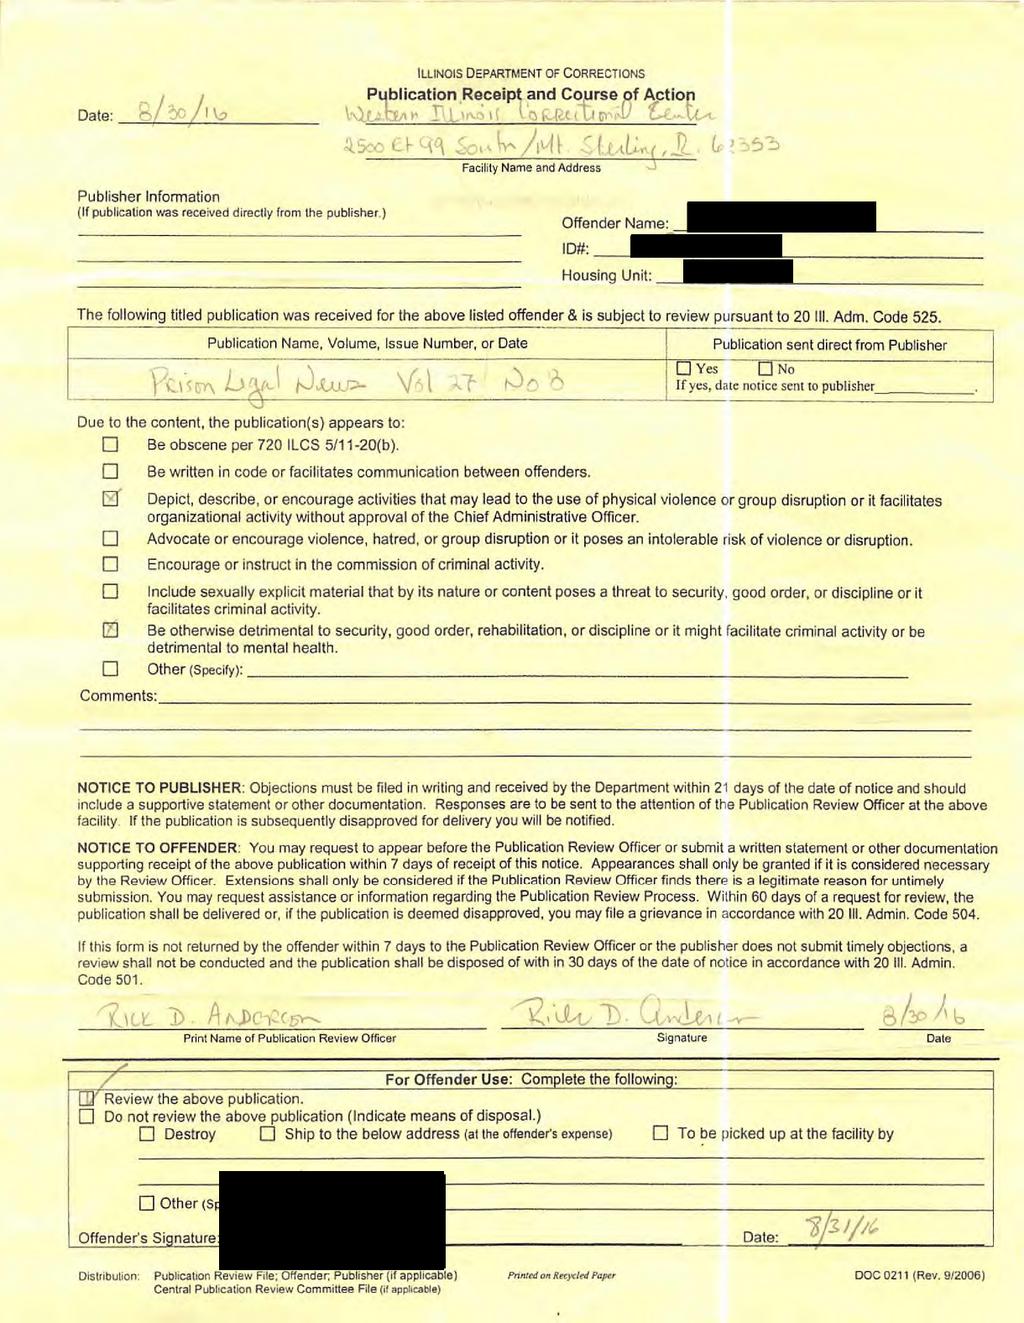 Case: 1:18-cv-01136 Document #: 1